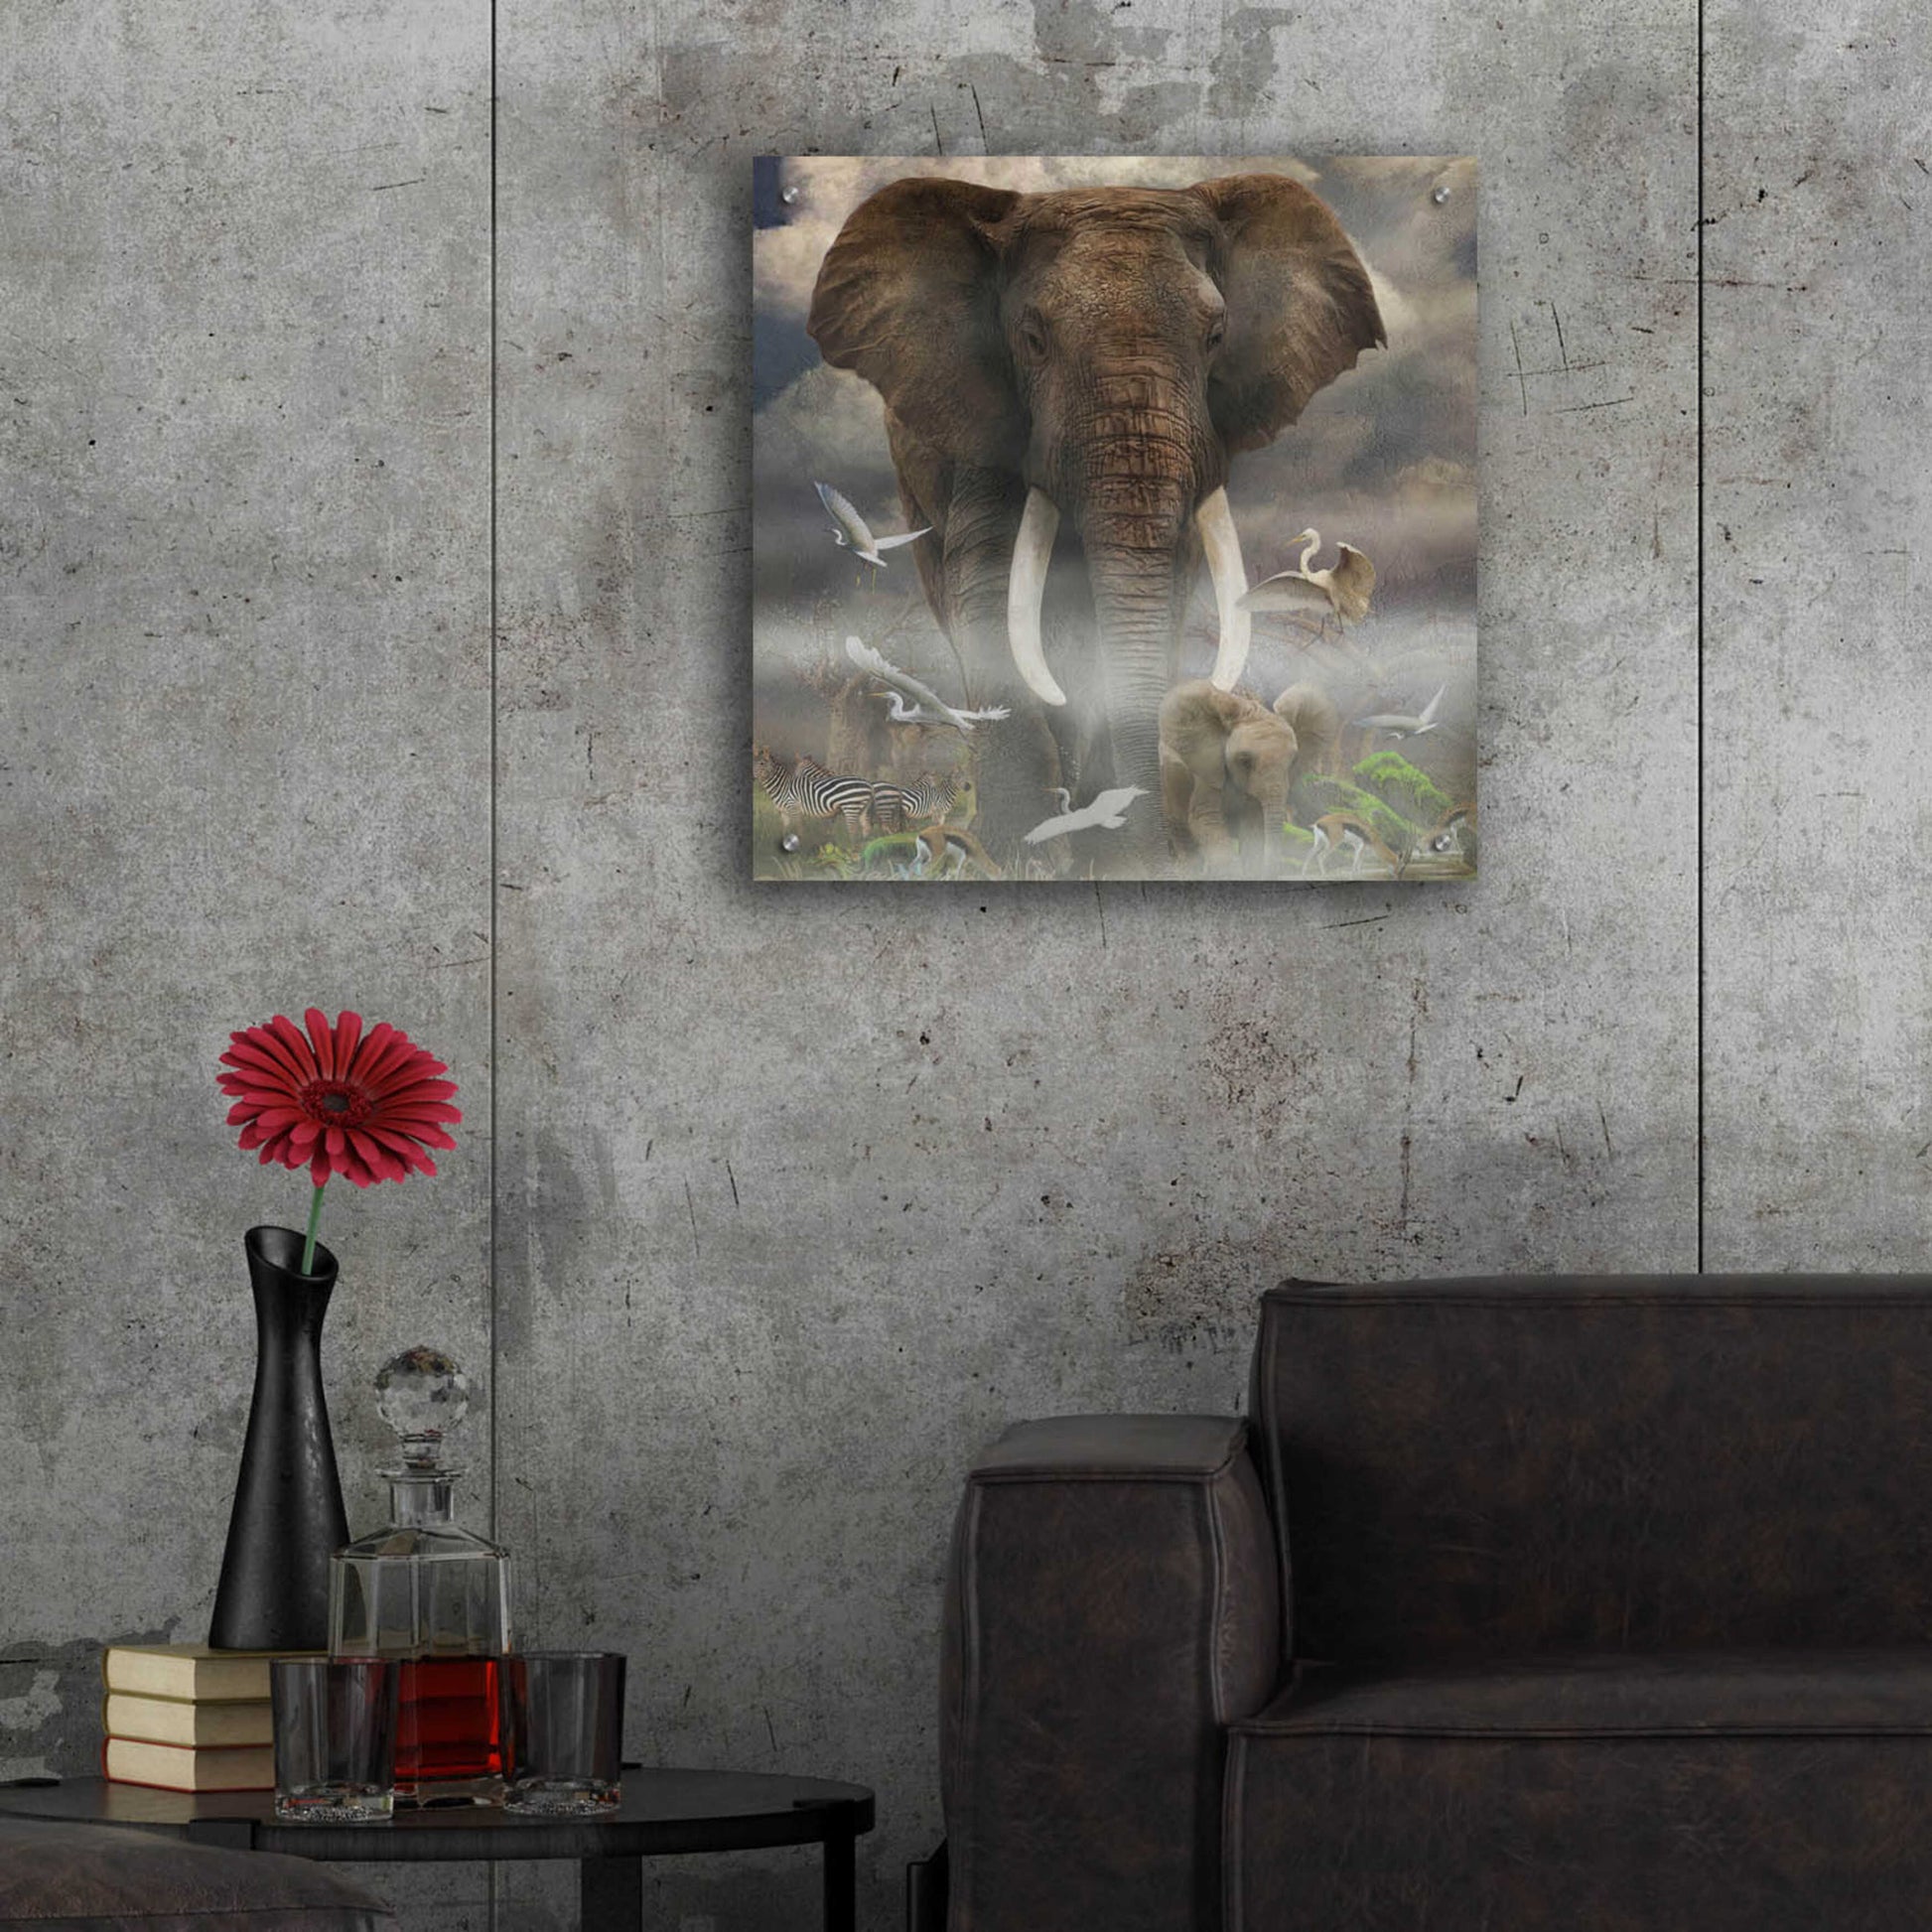 Epic Art 'Mighty Elephant' by Enright, Acrylic Glass Wall Art,24x24